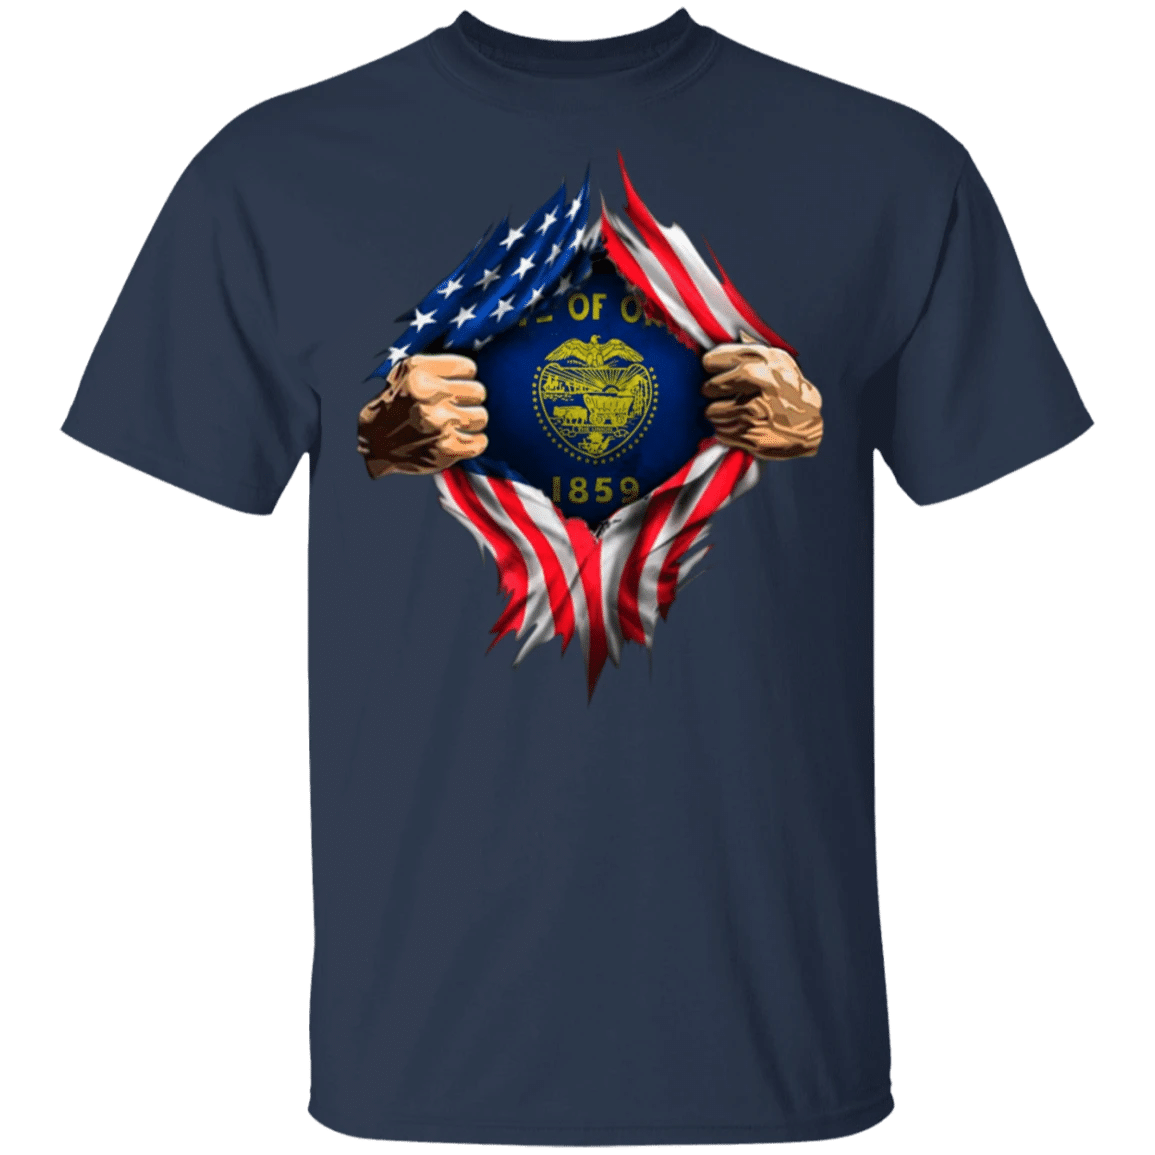 Oregon Heartbeat Inside American Flag T-Shirt Cool 4th Of July Shirts Patriotic